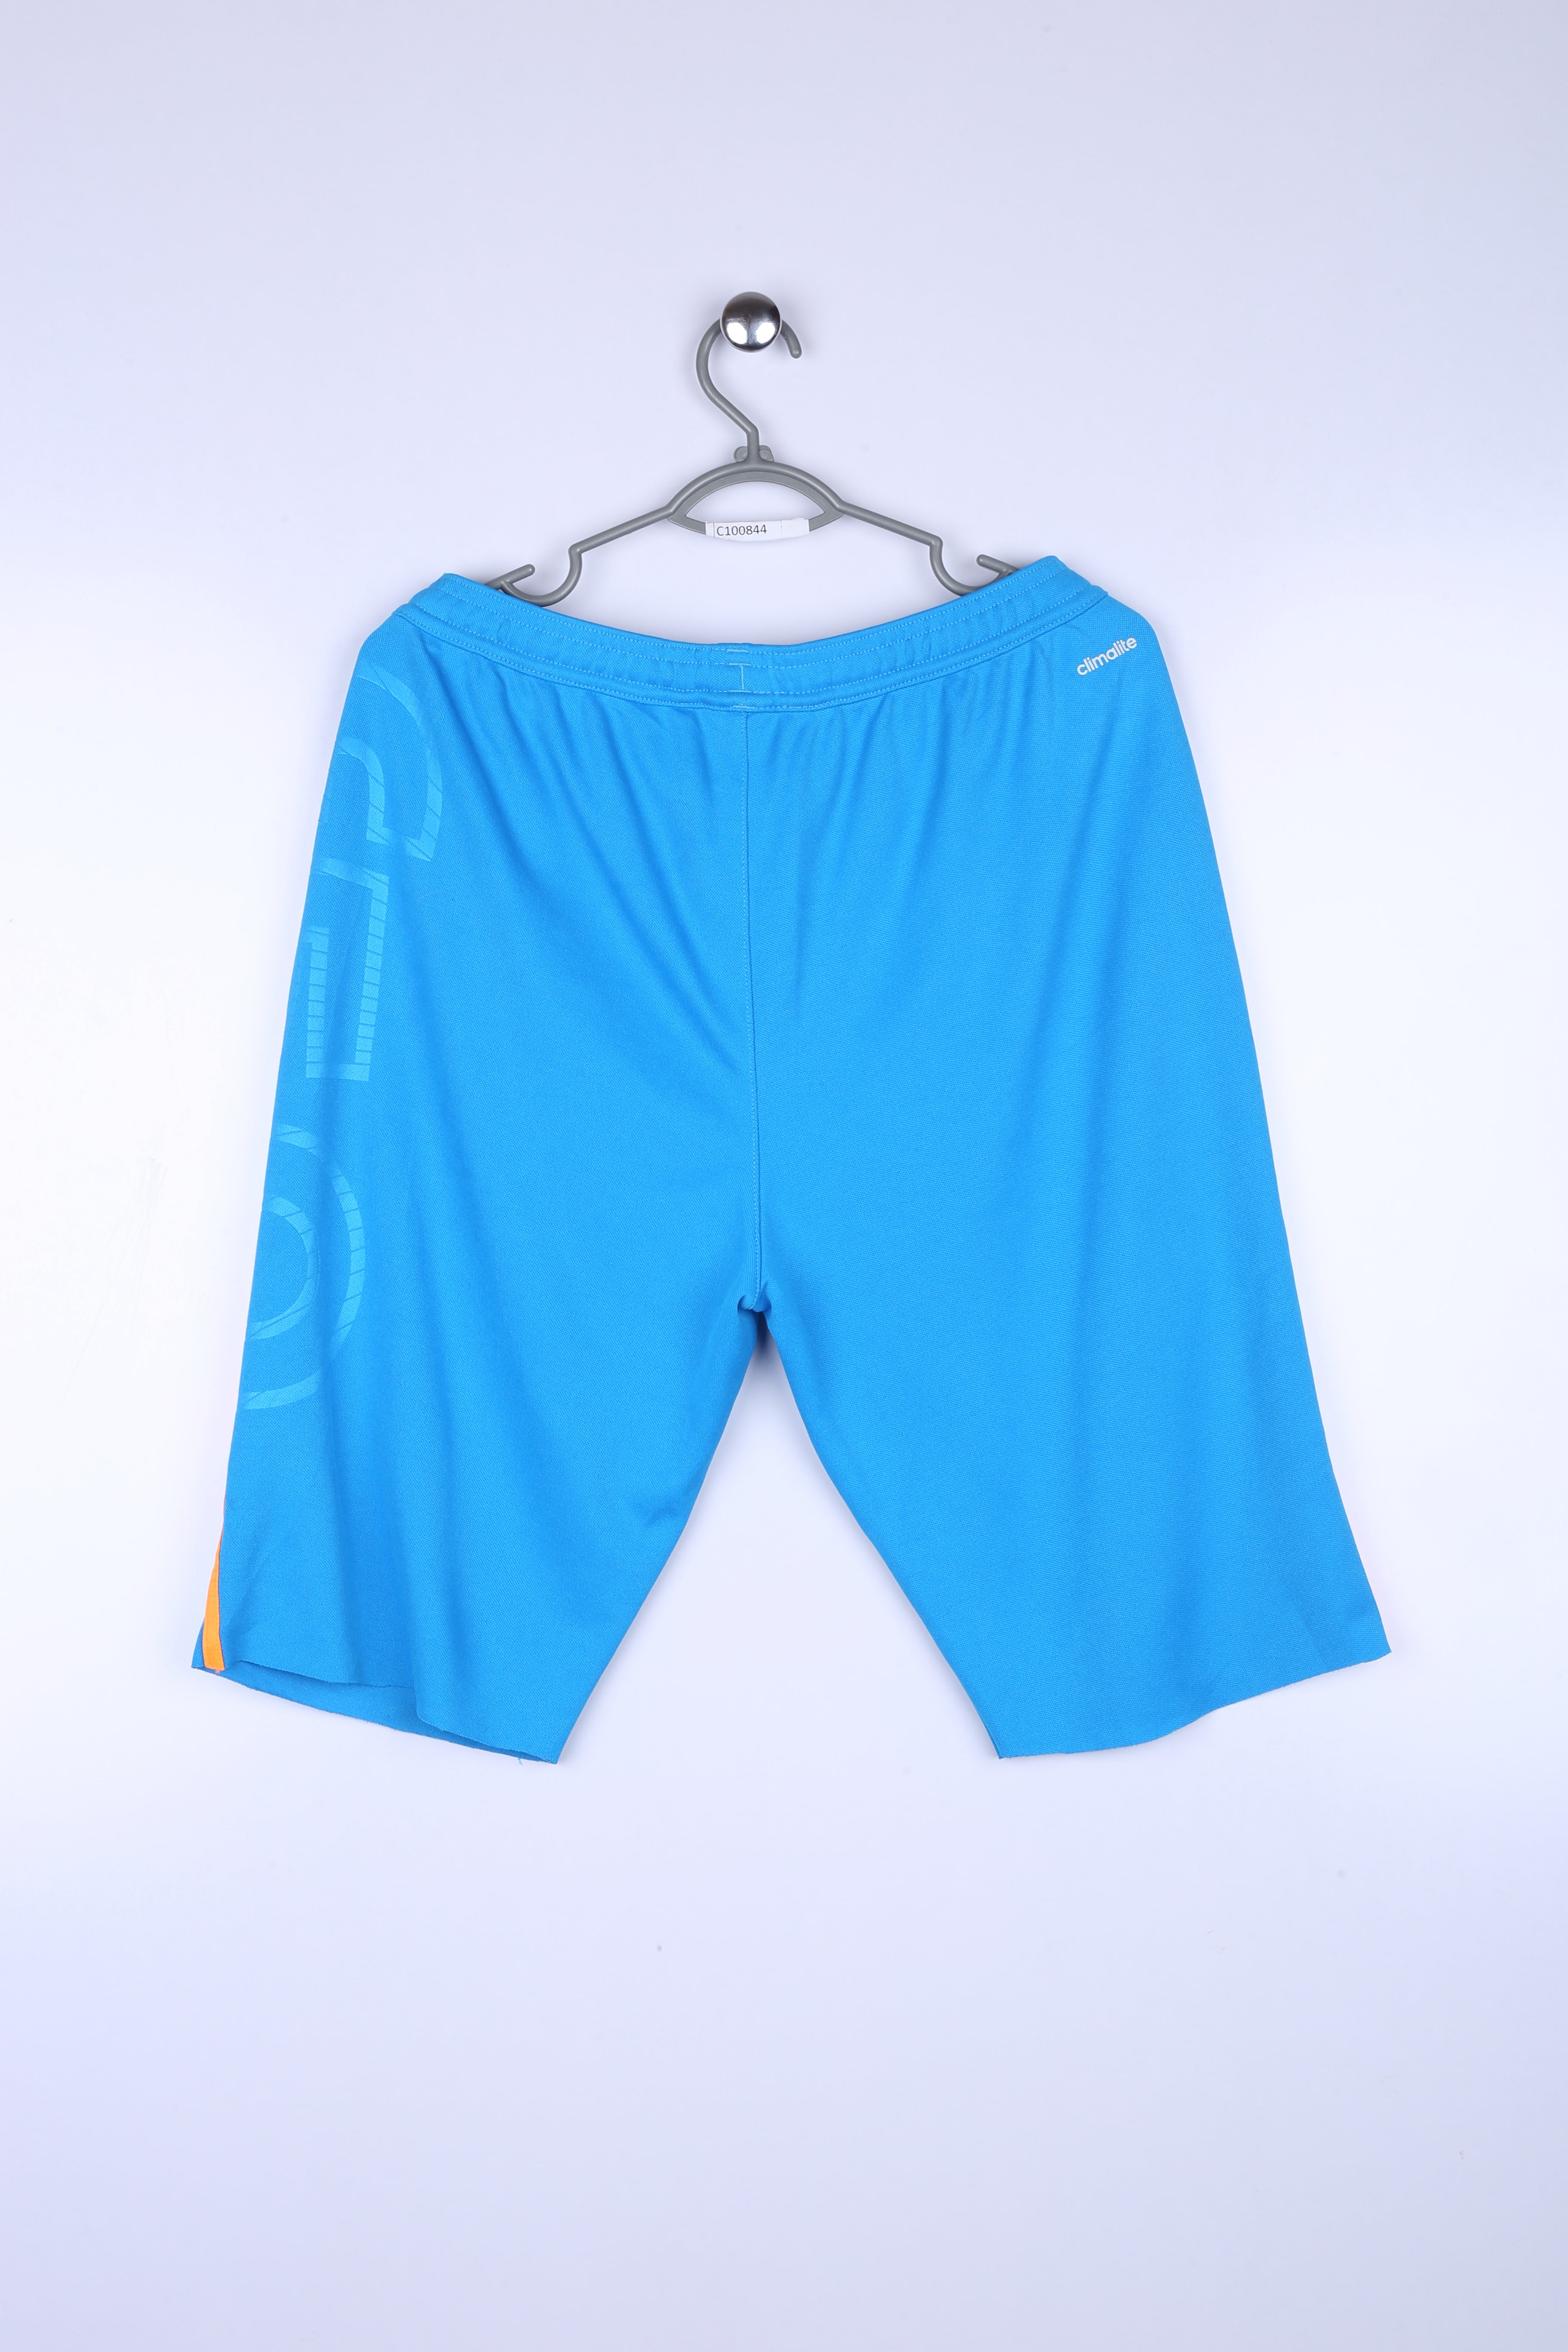 Vintage Adidas Shorts Blue Small